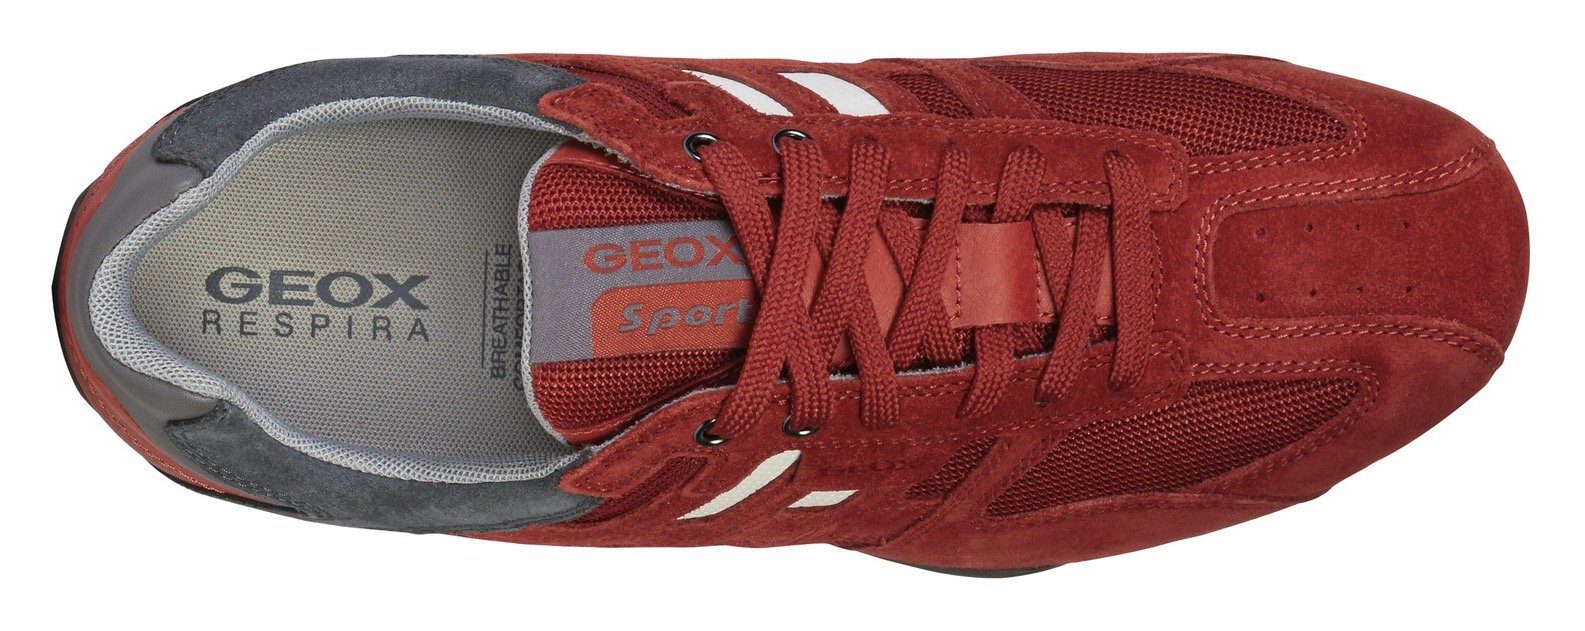 Geox Snake Sneaker Membrane Geox Materialmix rot-grau im Spezial mit